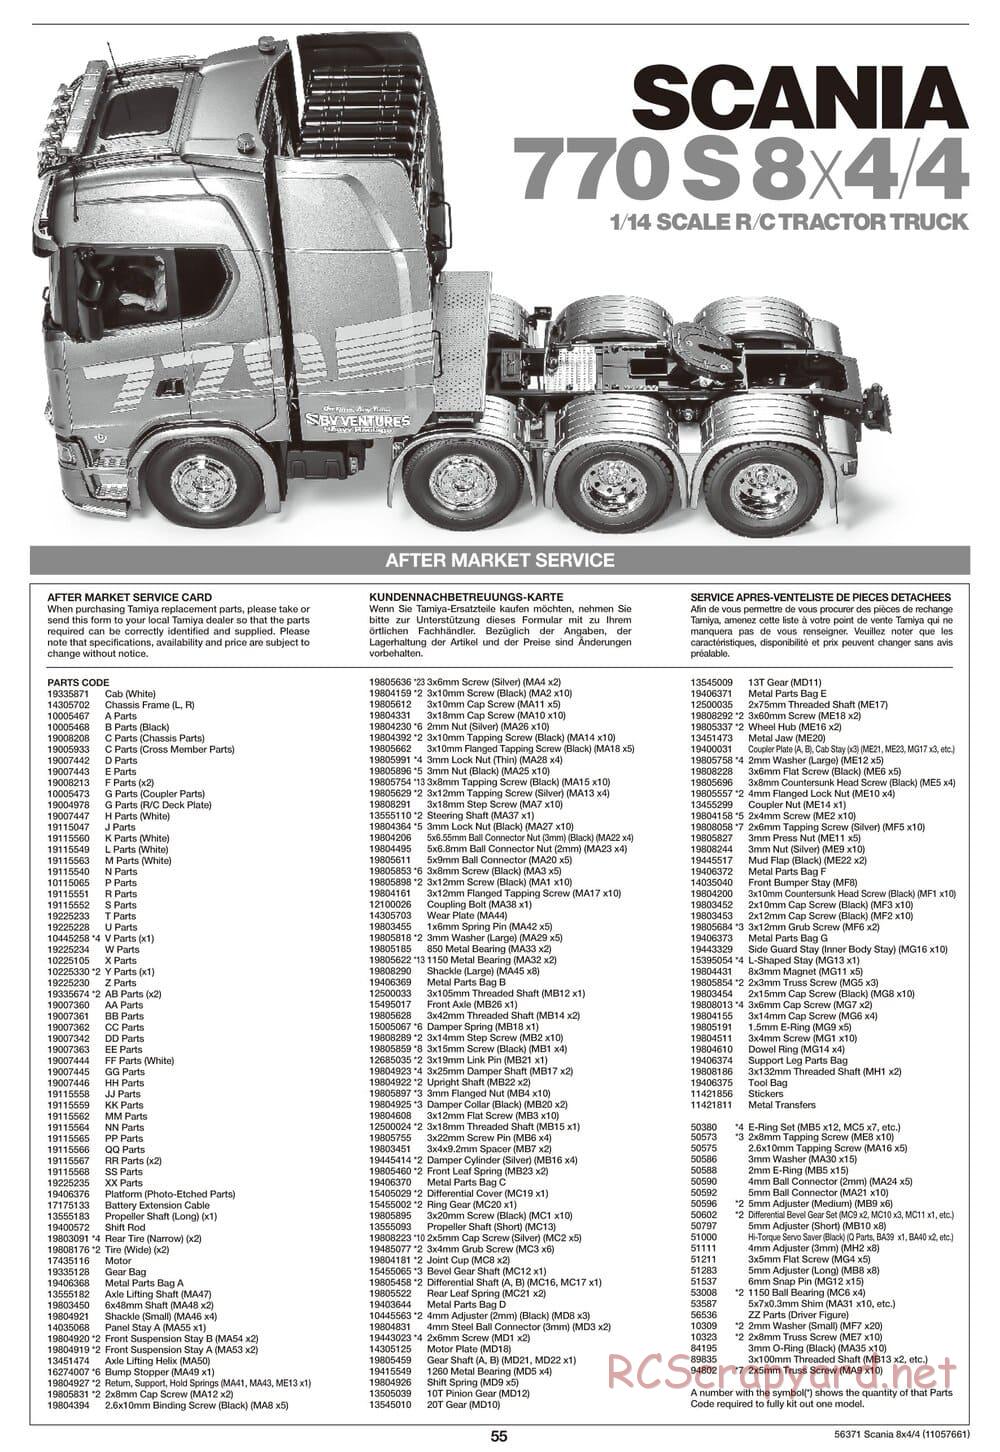 Tamiya - Scania 770 S 8x4/4 Chassis - Parts Manual - Page 9